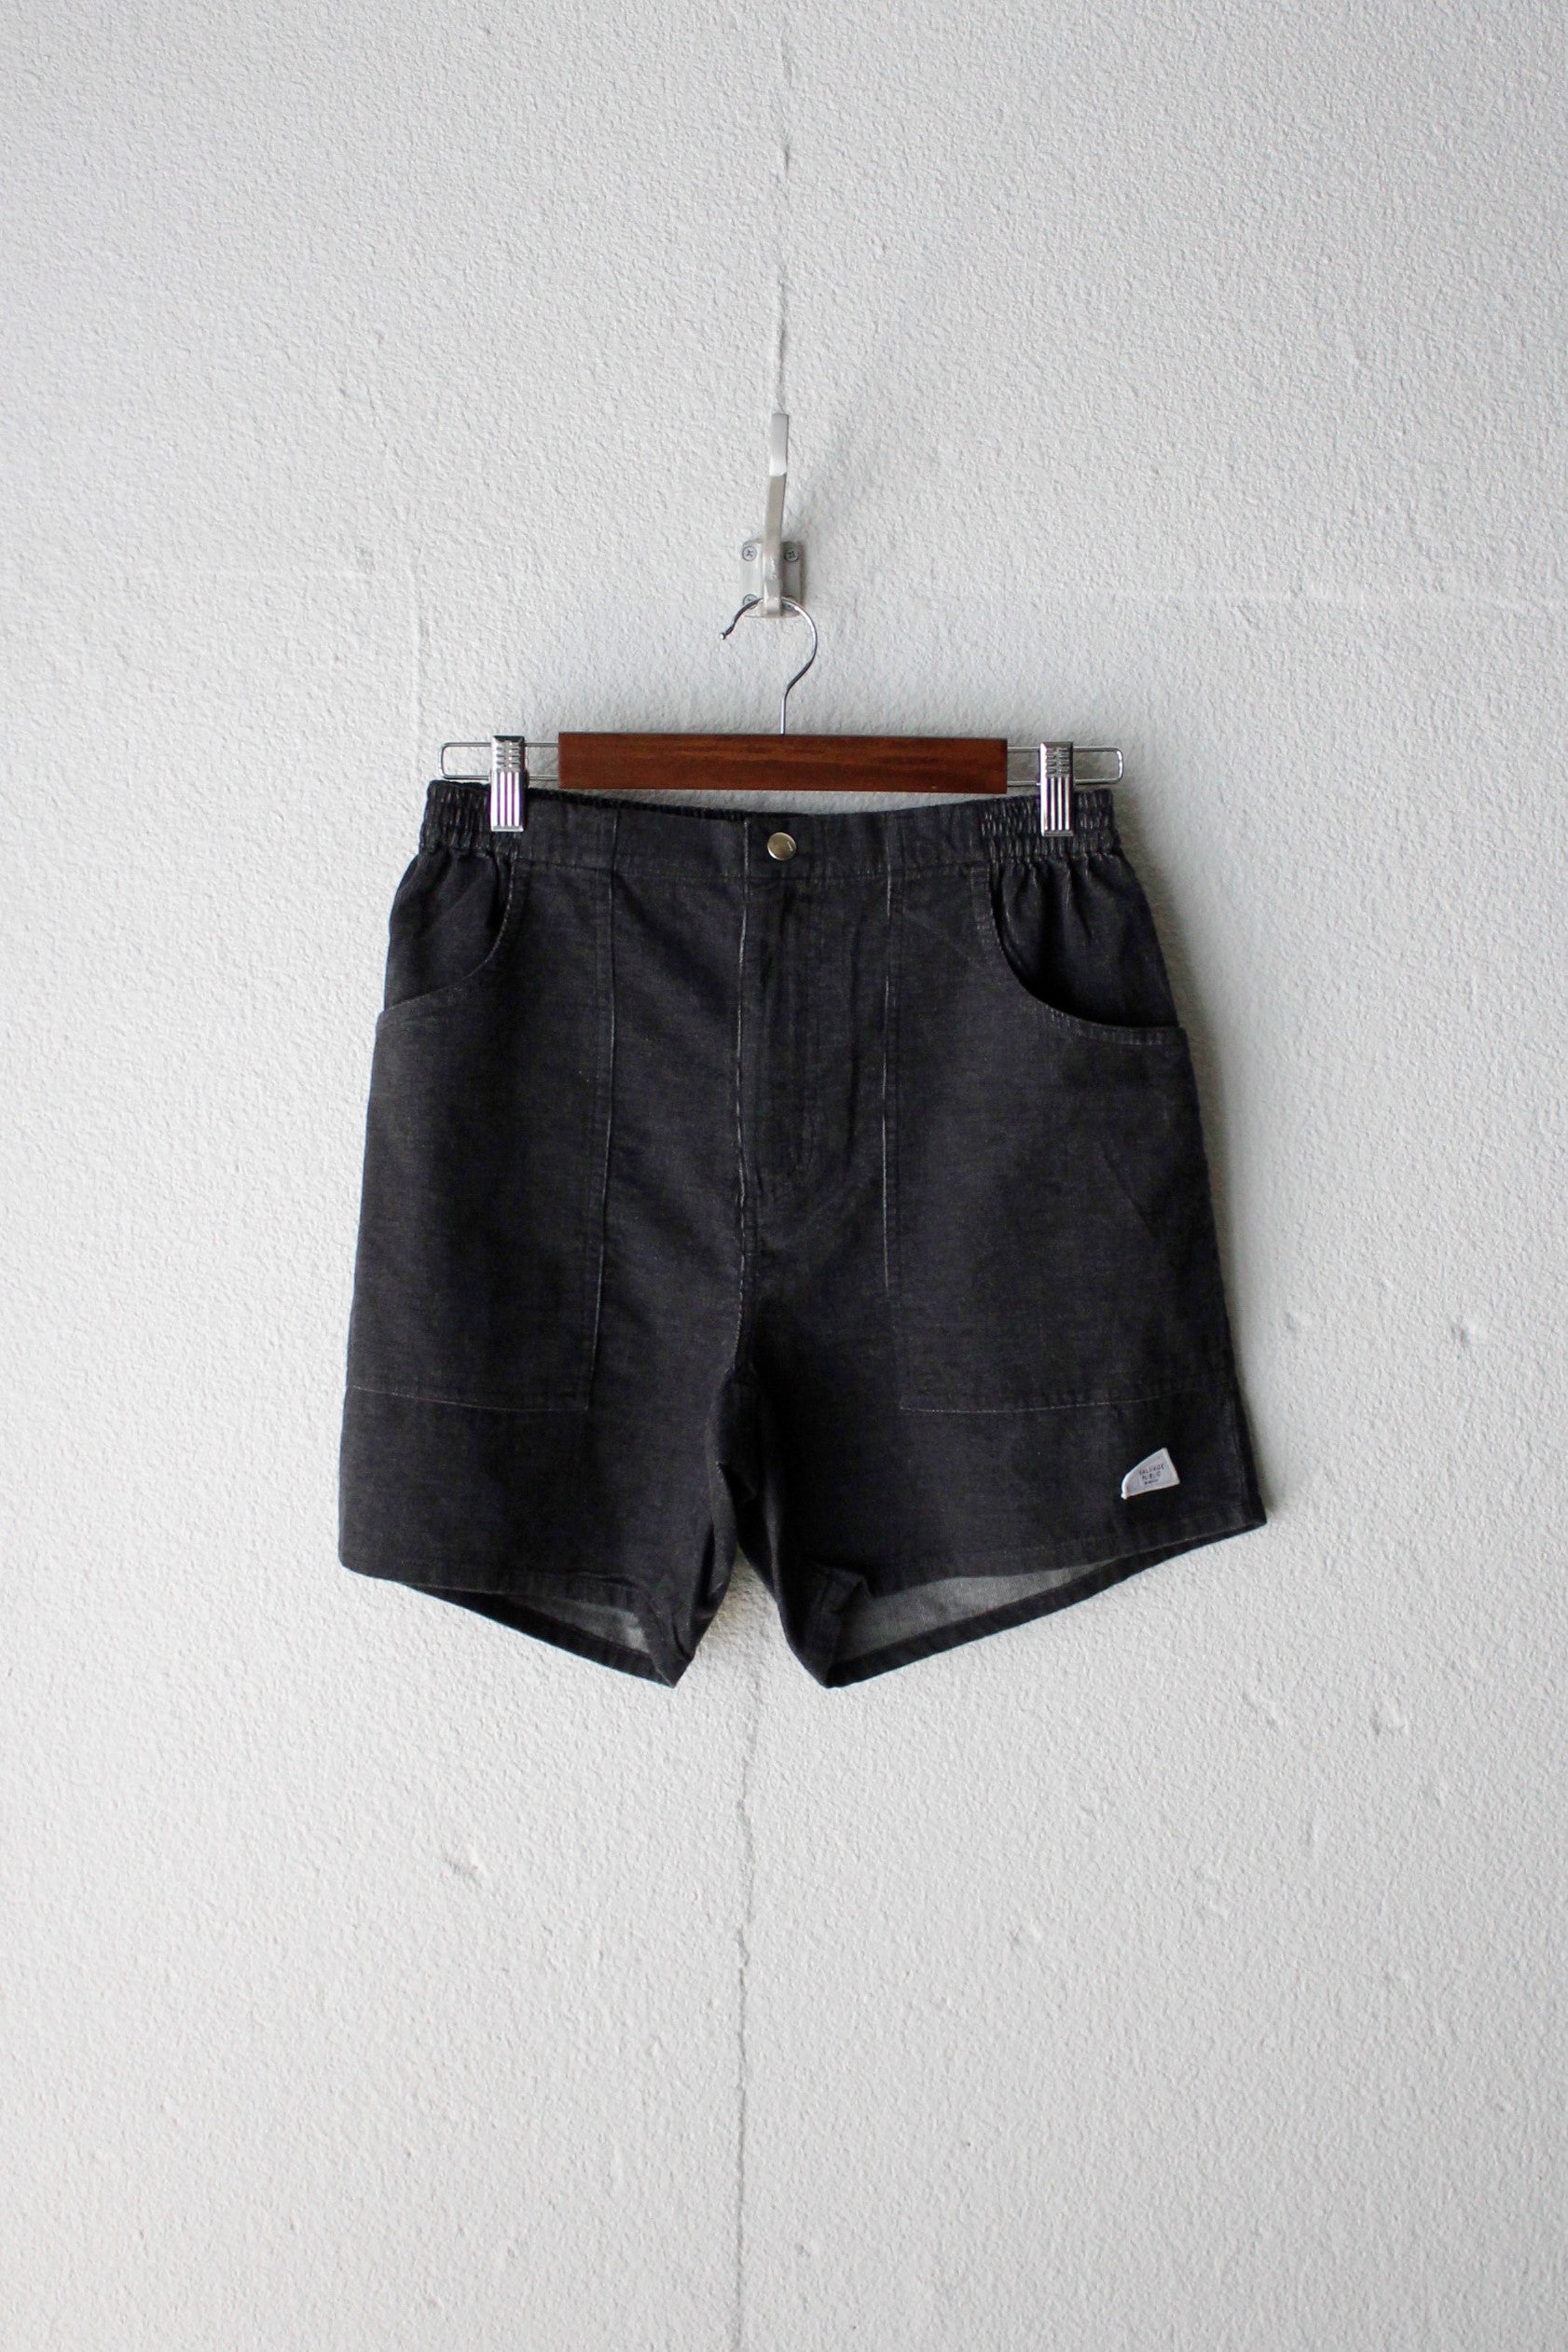 Corduroy Baker Shorts